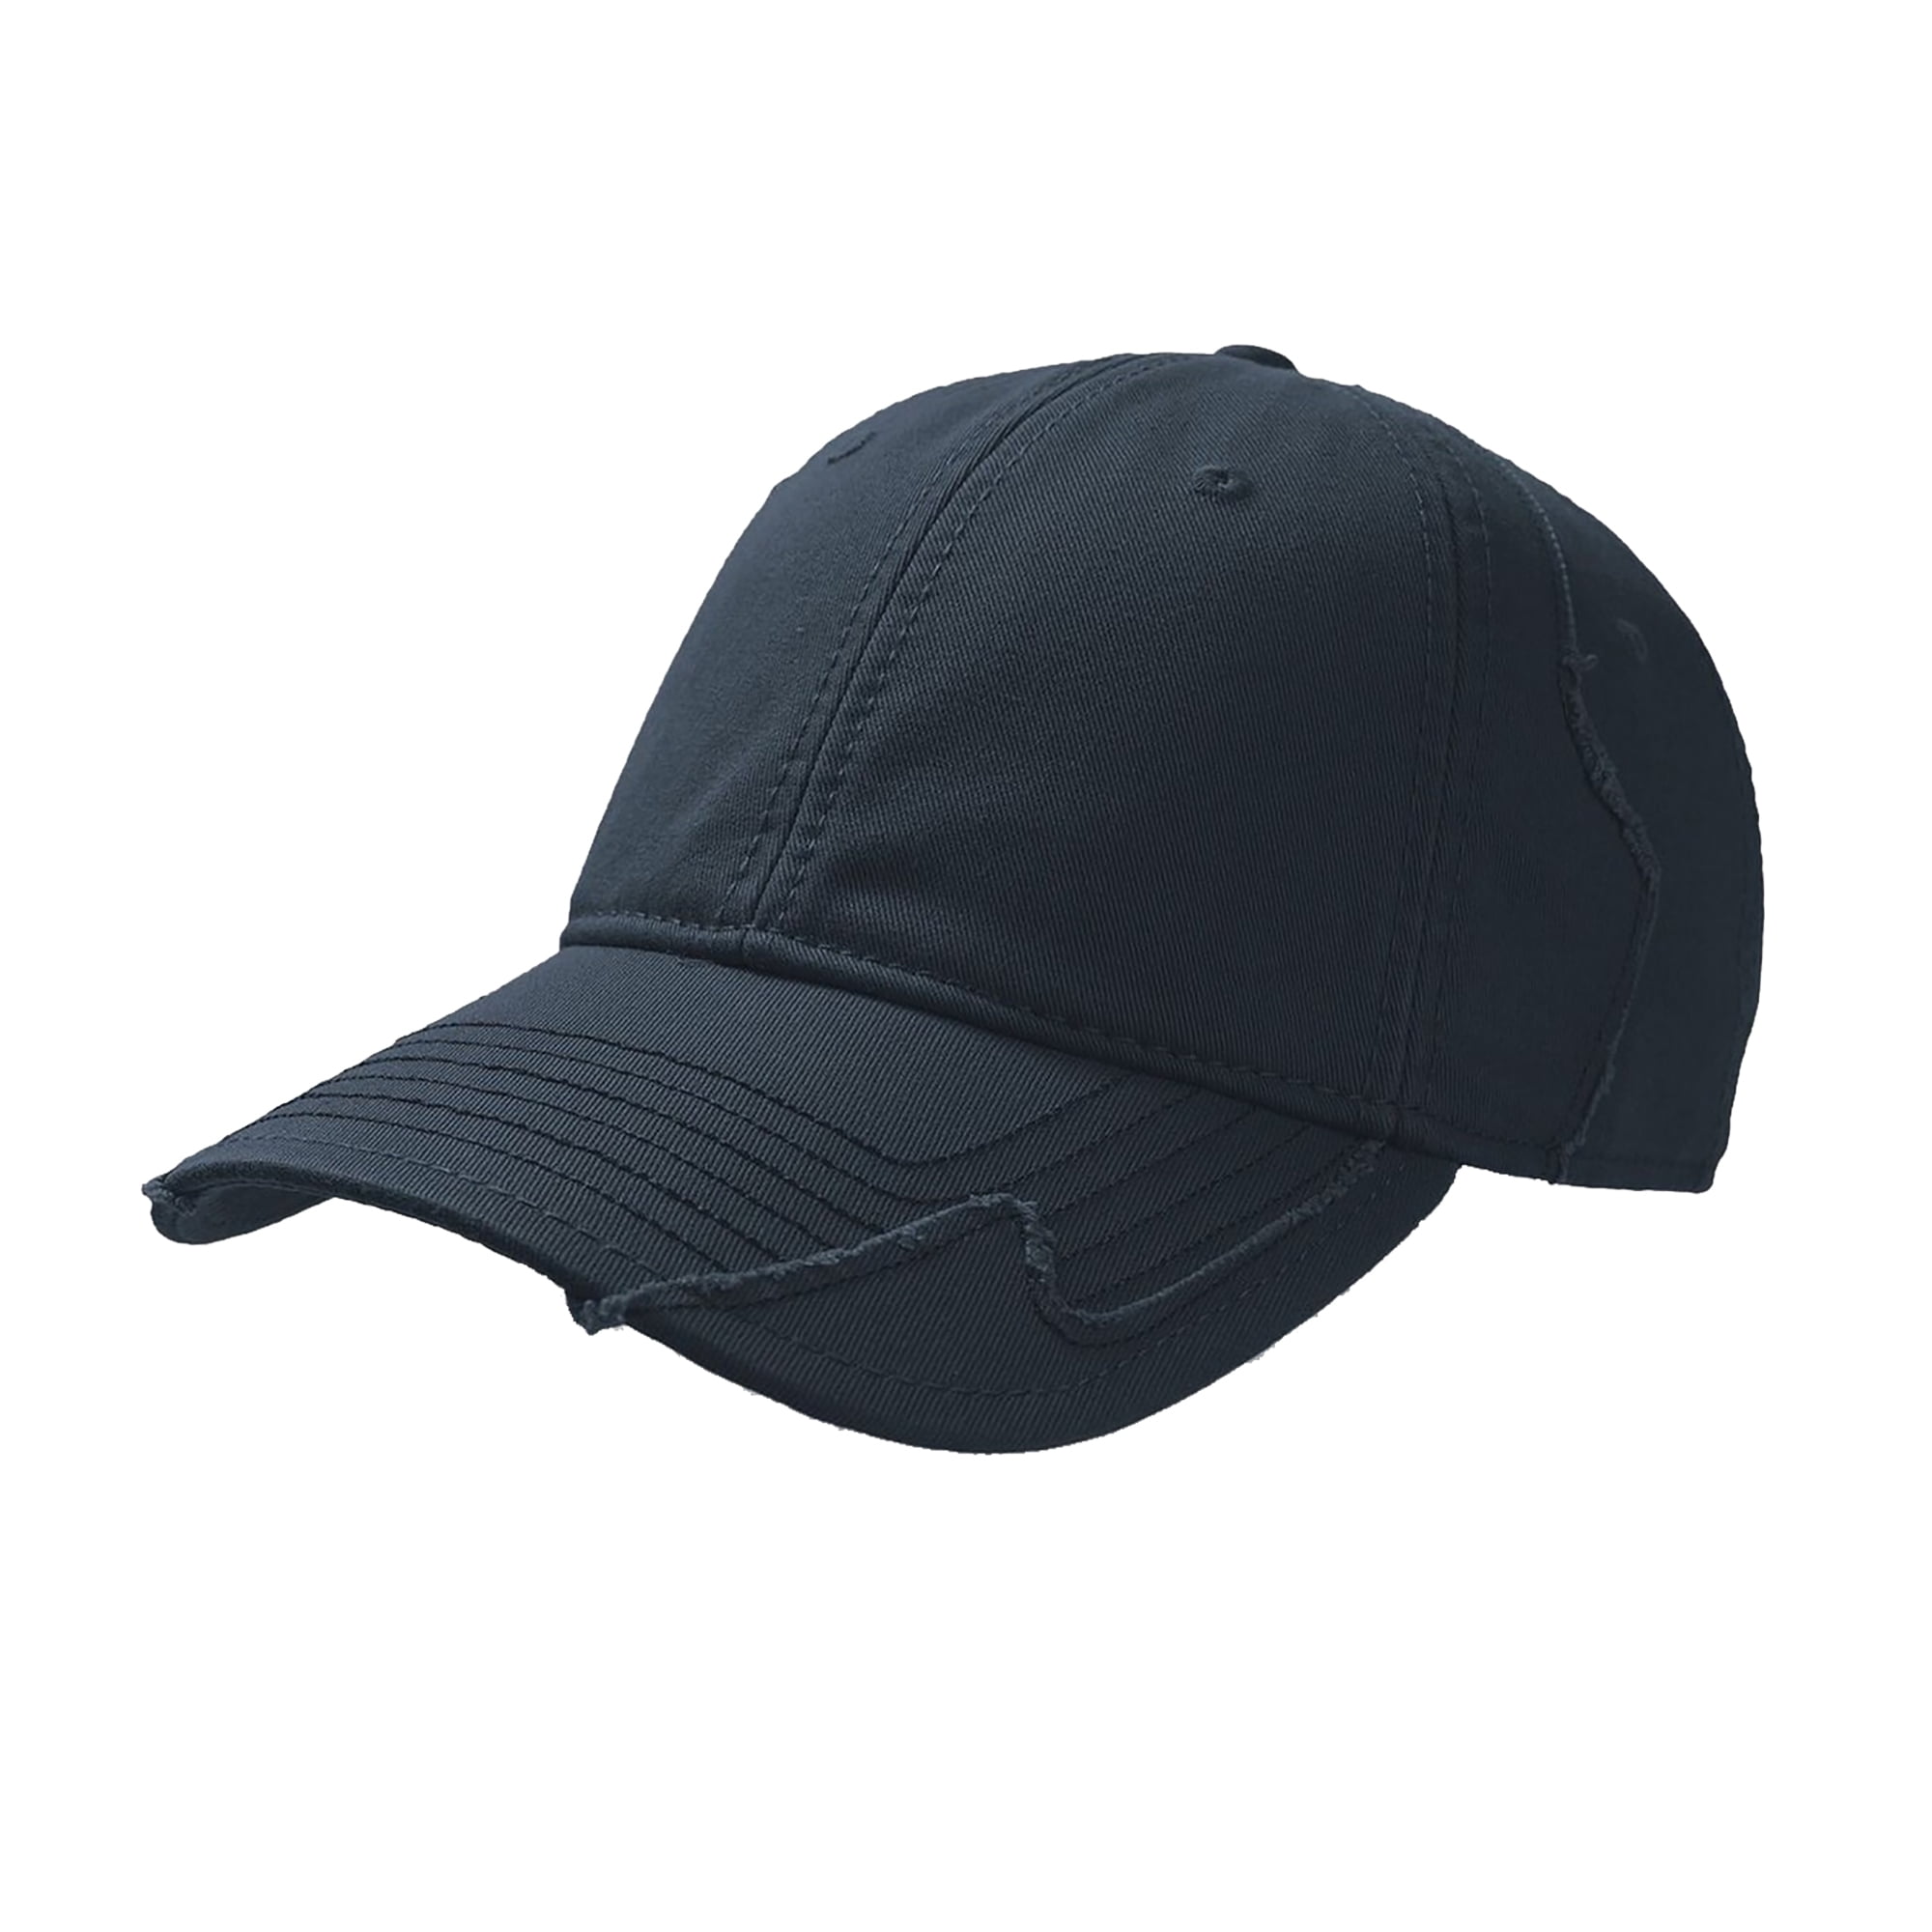 ATLANTIS hat RAPPER DESTROYED hats CAP TRUCKER baseball cap BLACK 